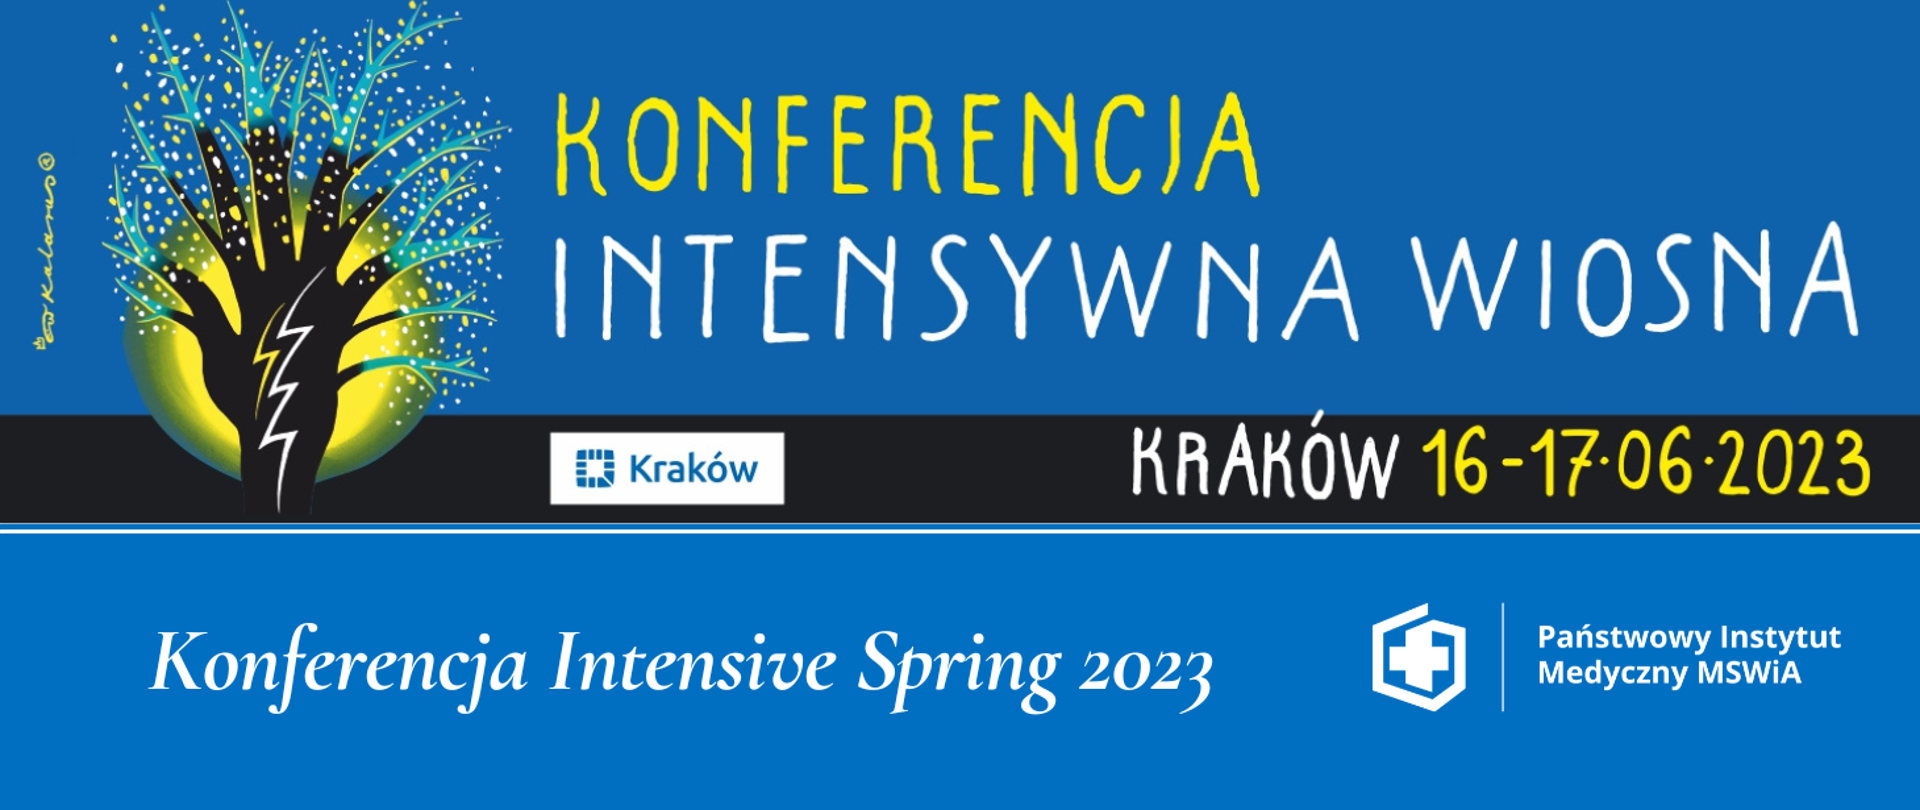 
Konferencja Intensive Spring 2023 